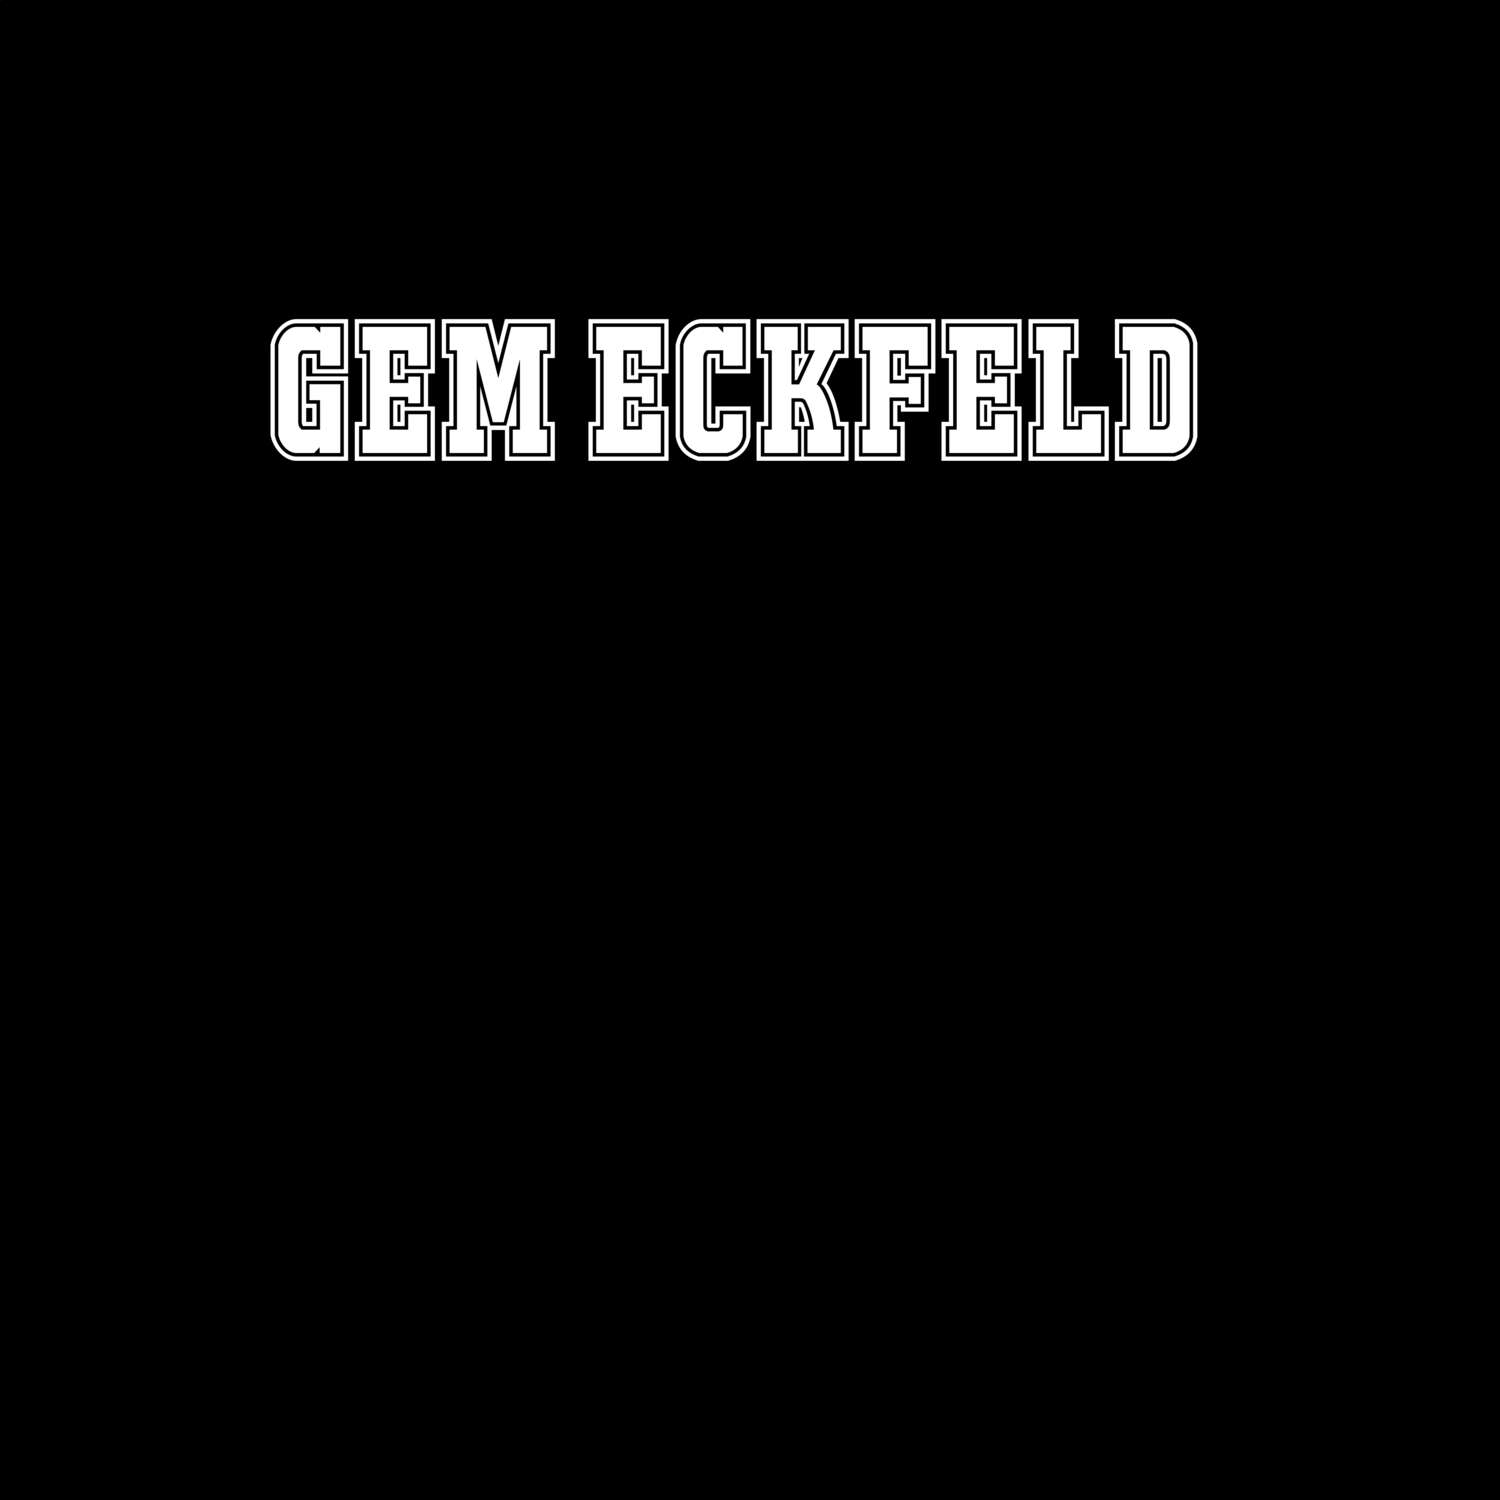 Gem Eckfeld T-Shirt »Classic«